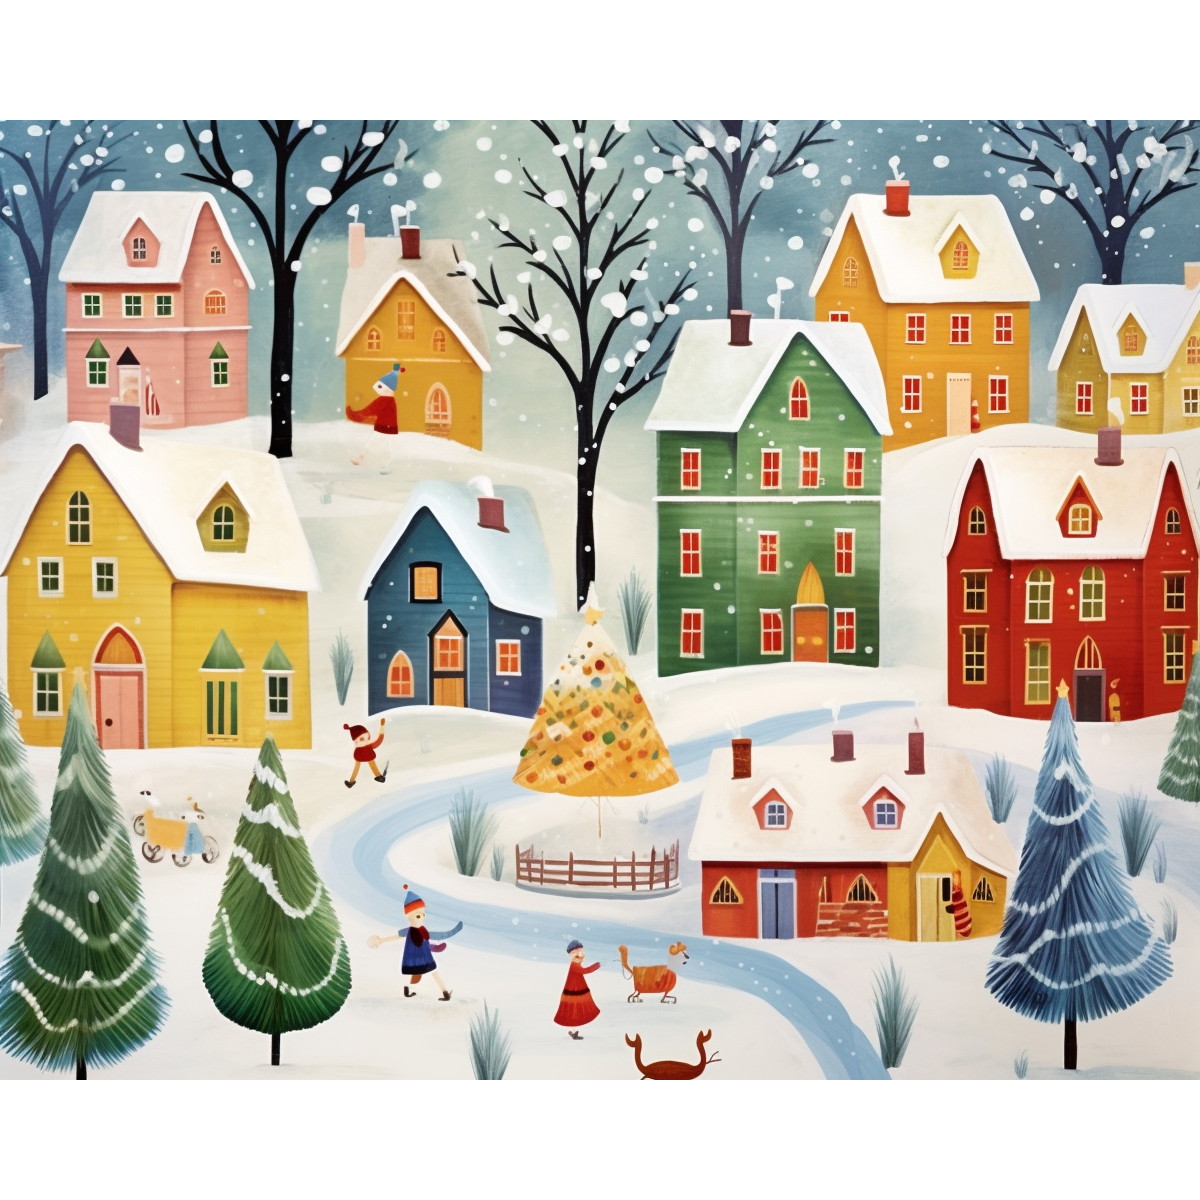 Whimsical Winter Village